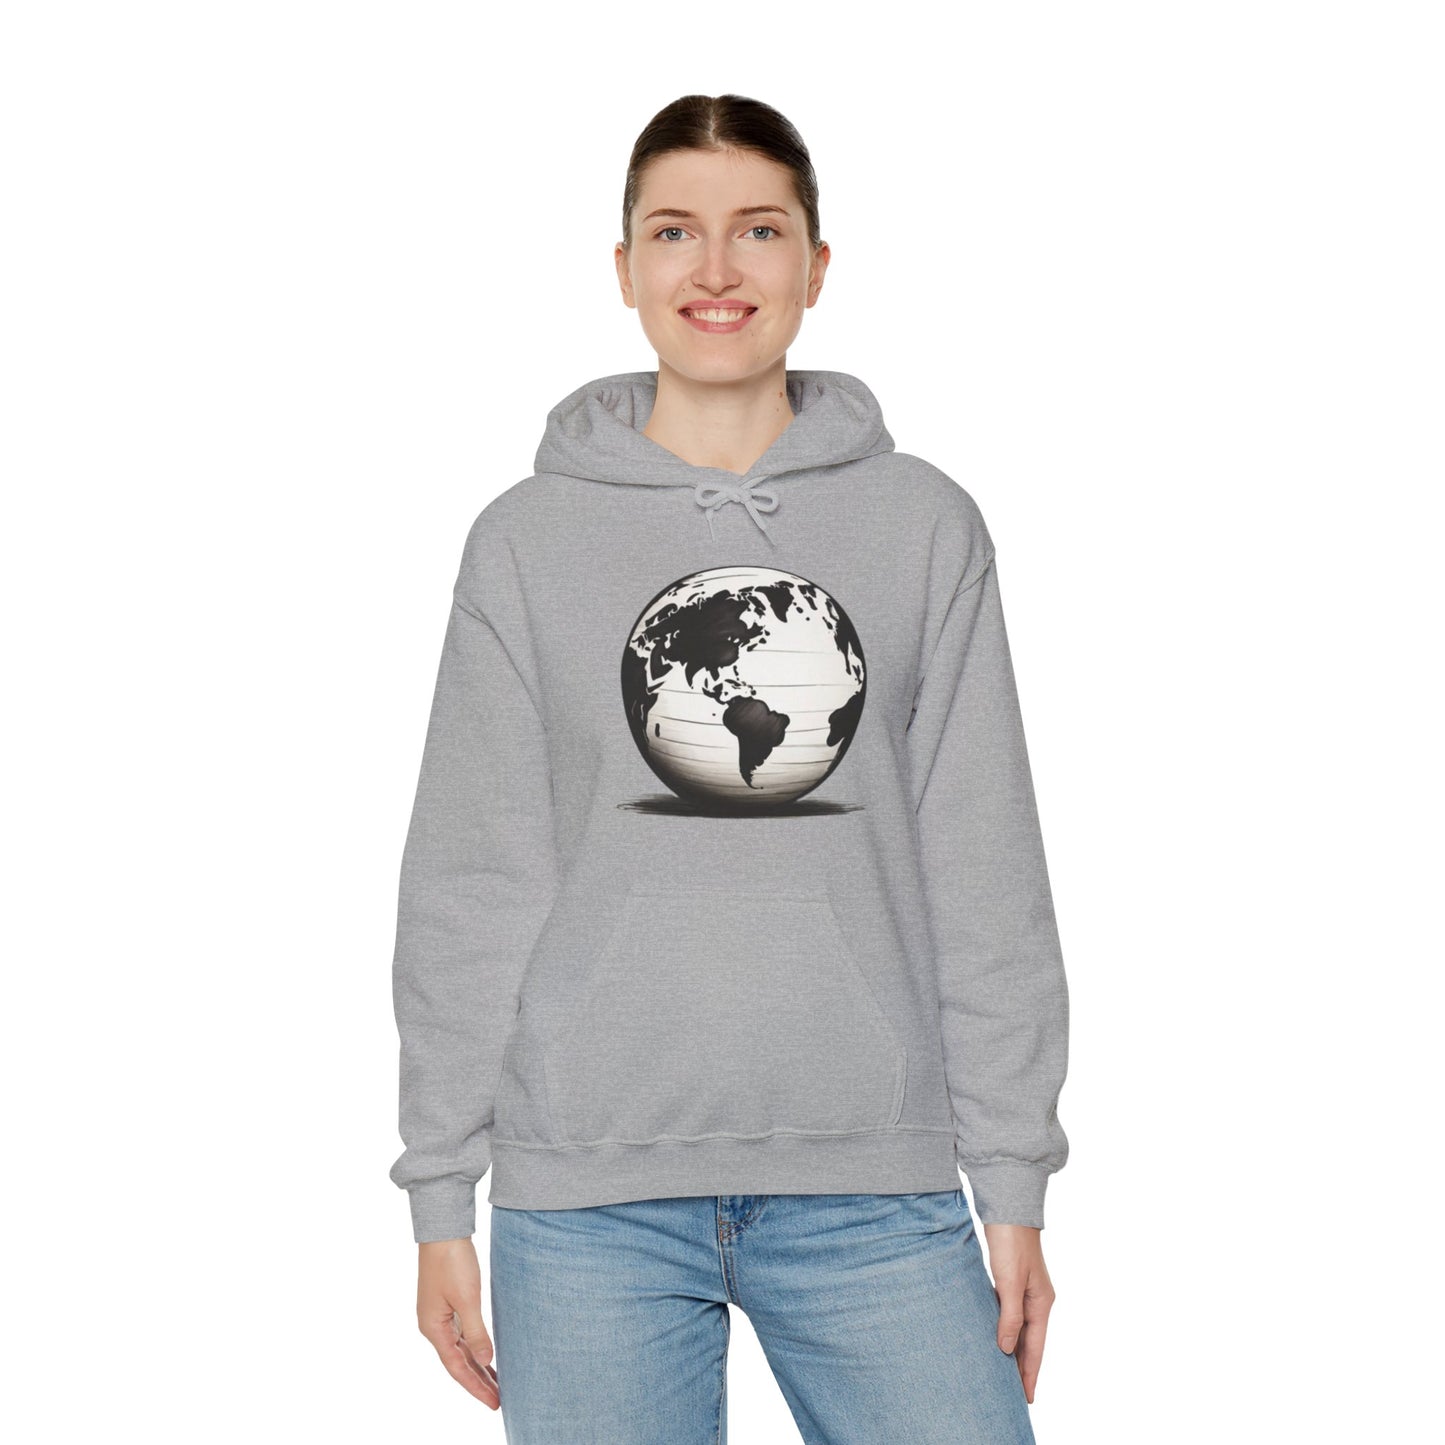 Black and White Earth Sphere - Unisex Hooded Sweatshirt